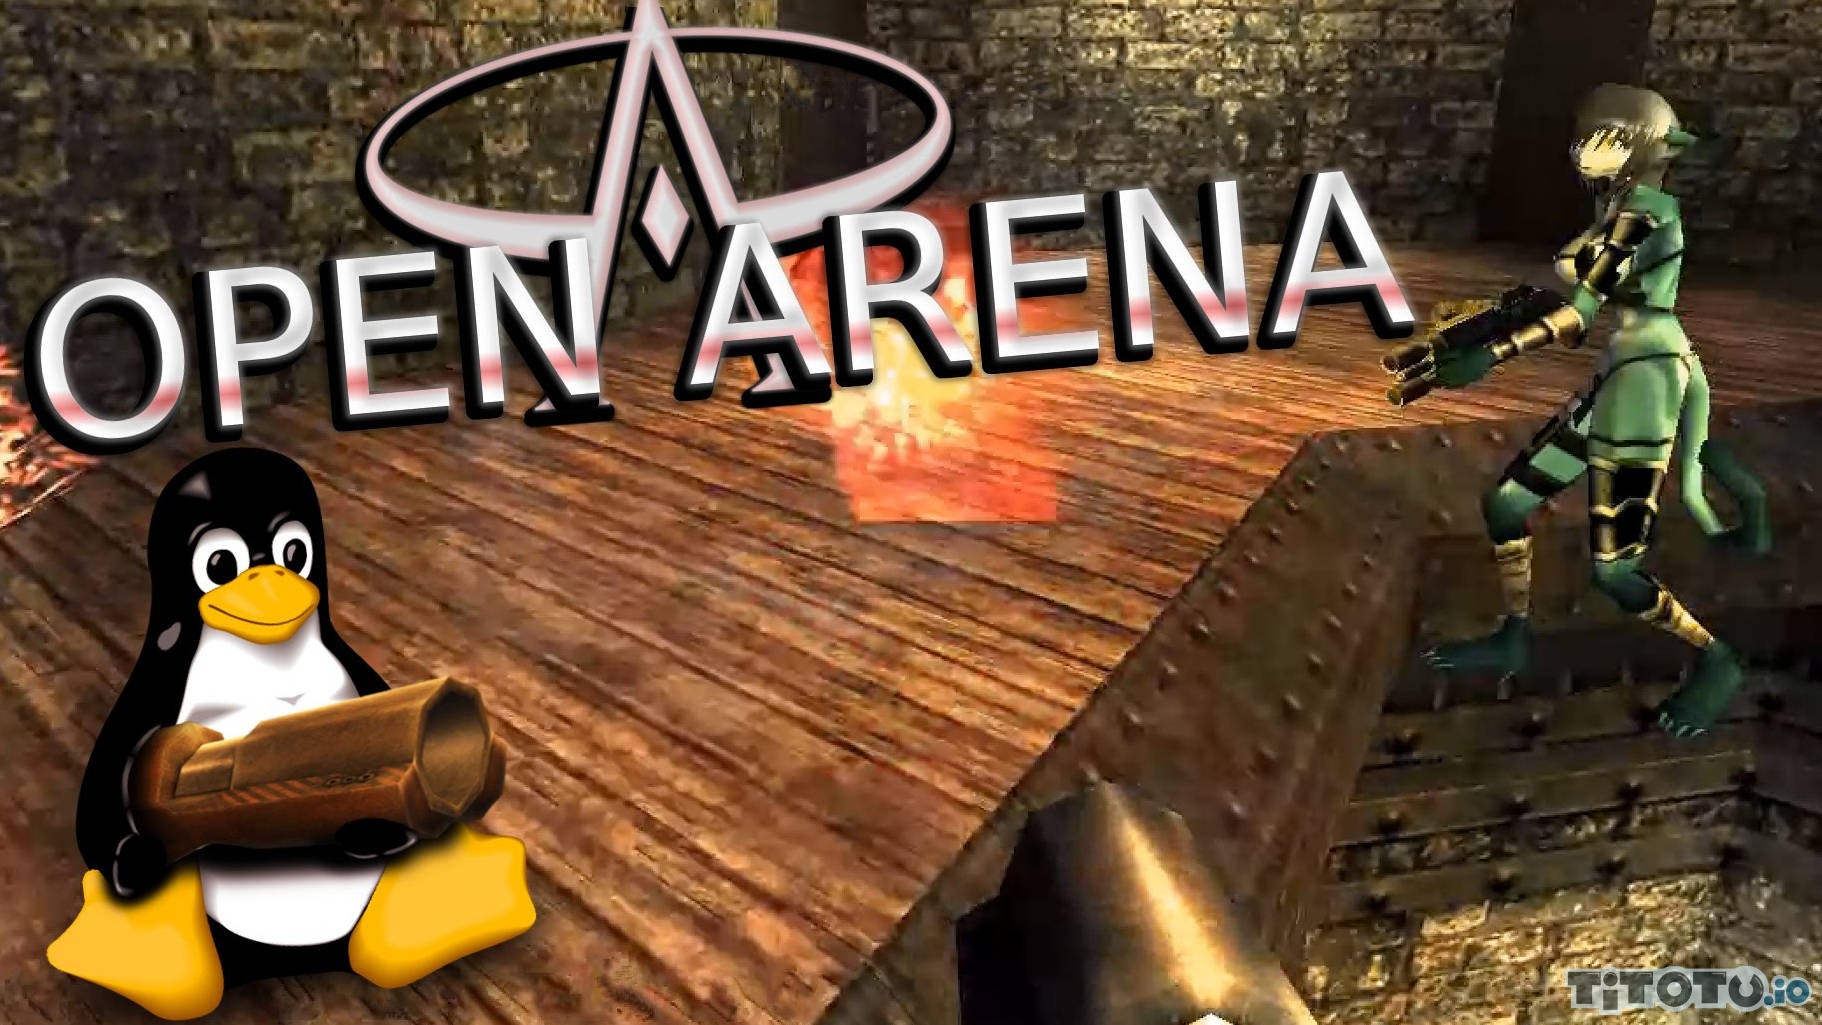 open arena cnet